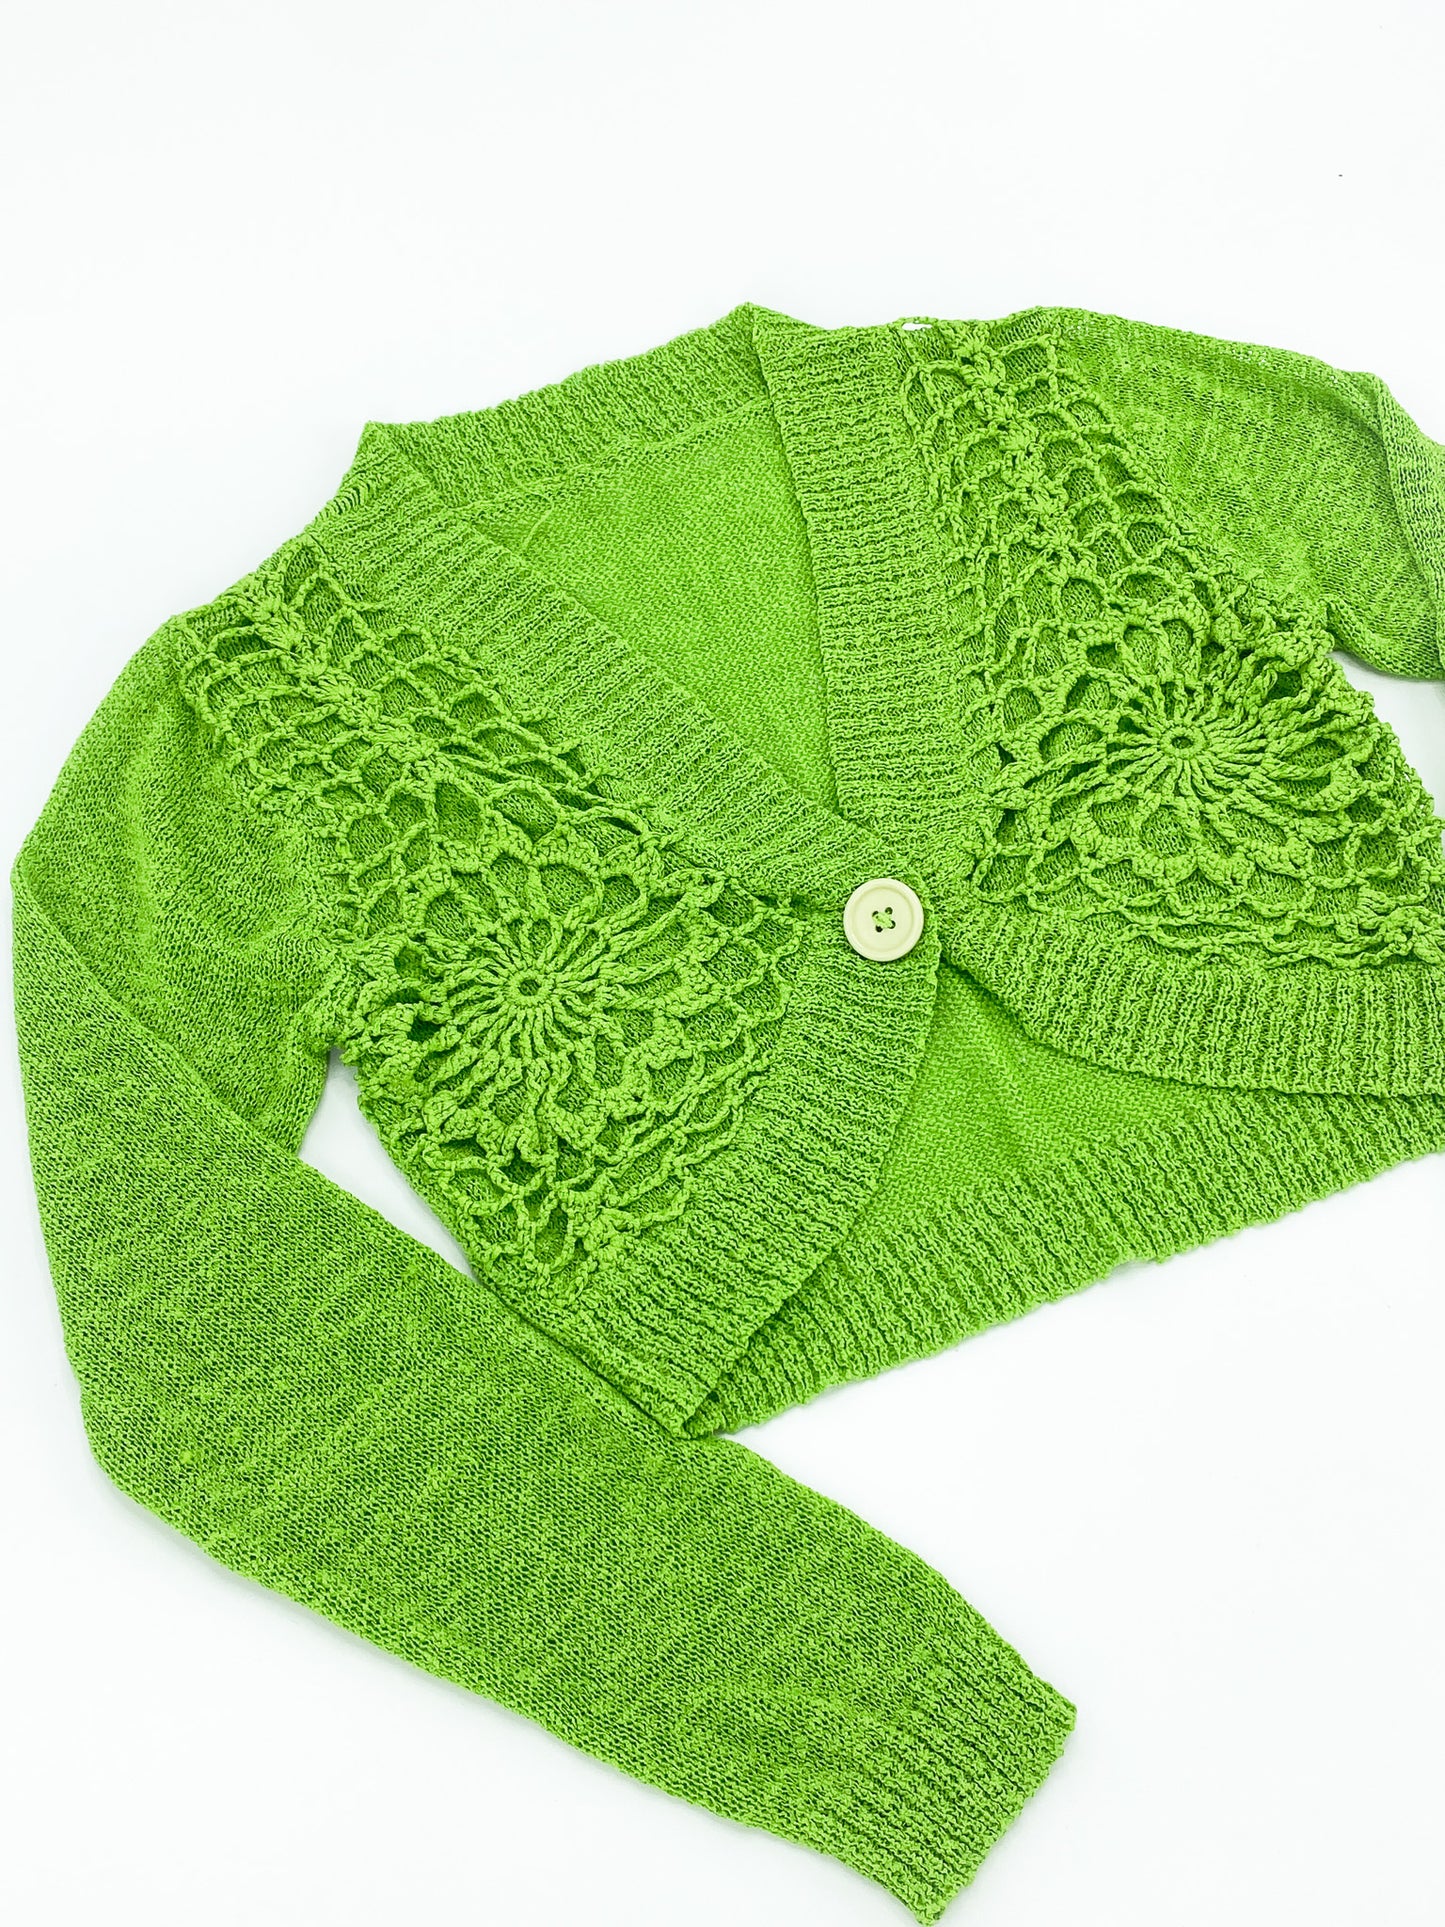 Vintage Green Crochet Cardigan - S